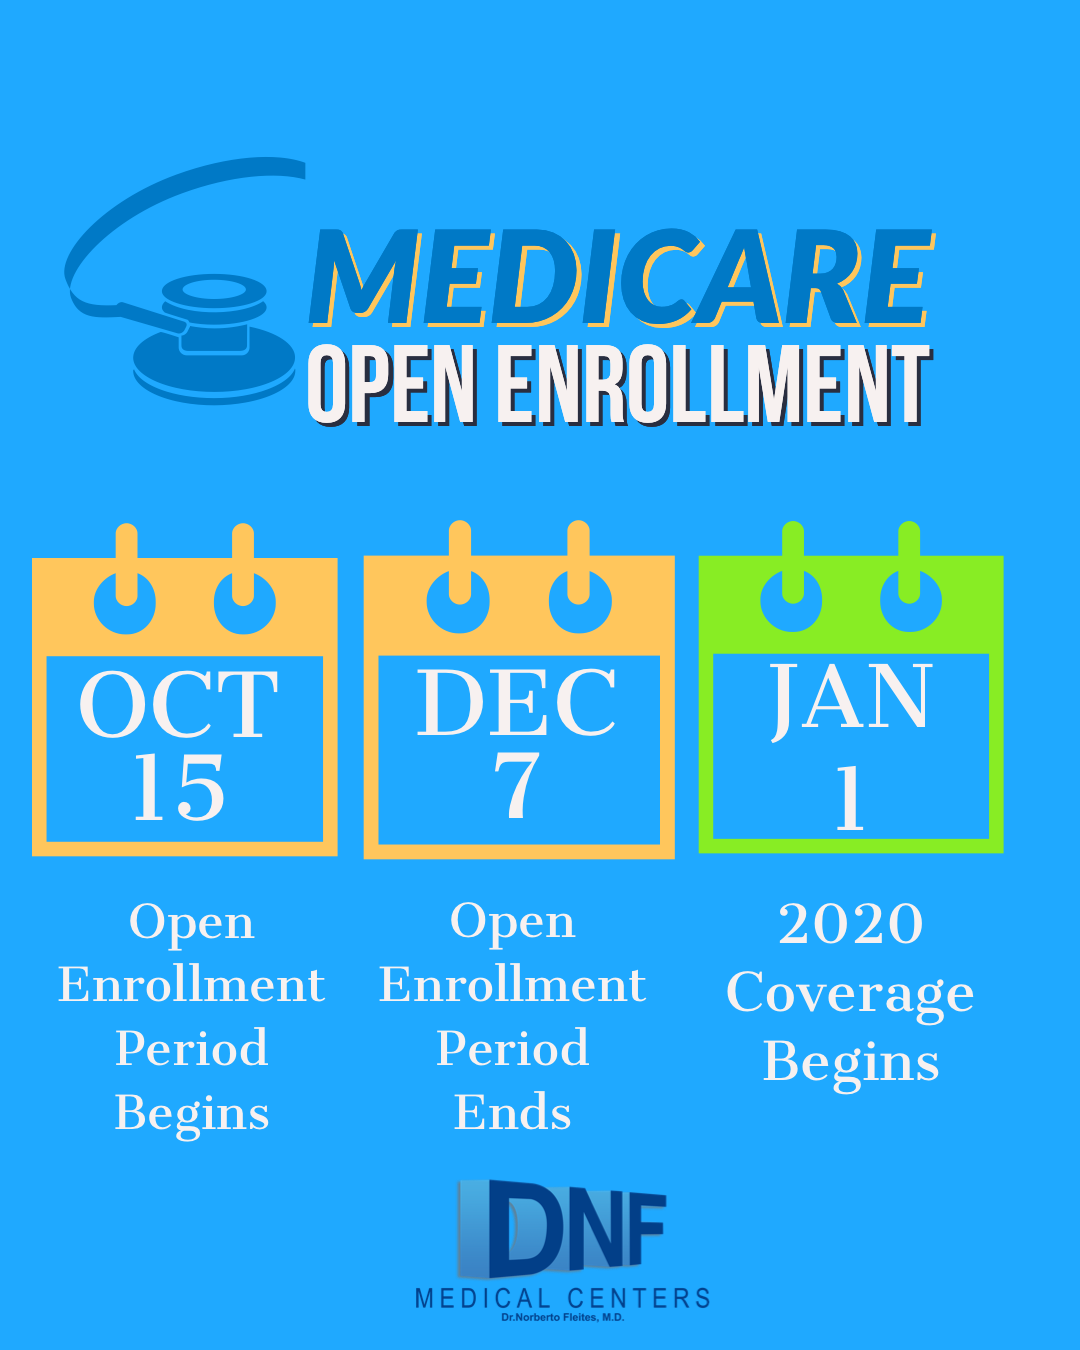 Let’s talk about Medicare Open Enrollment DNF Medical Centers®